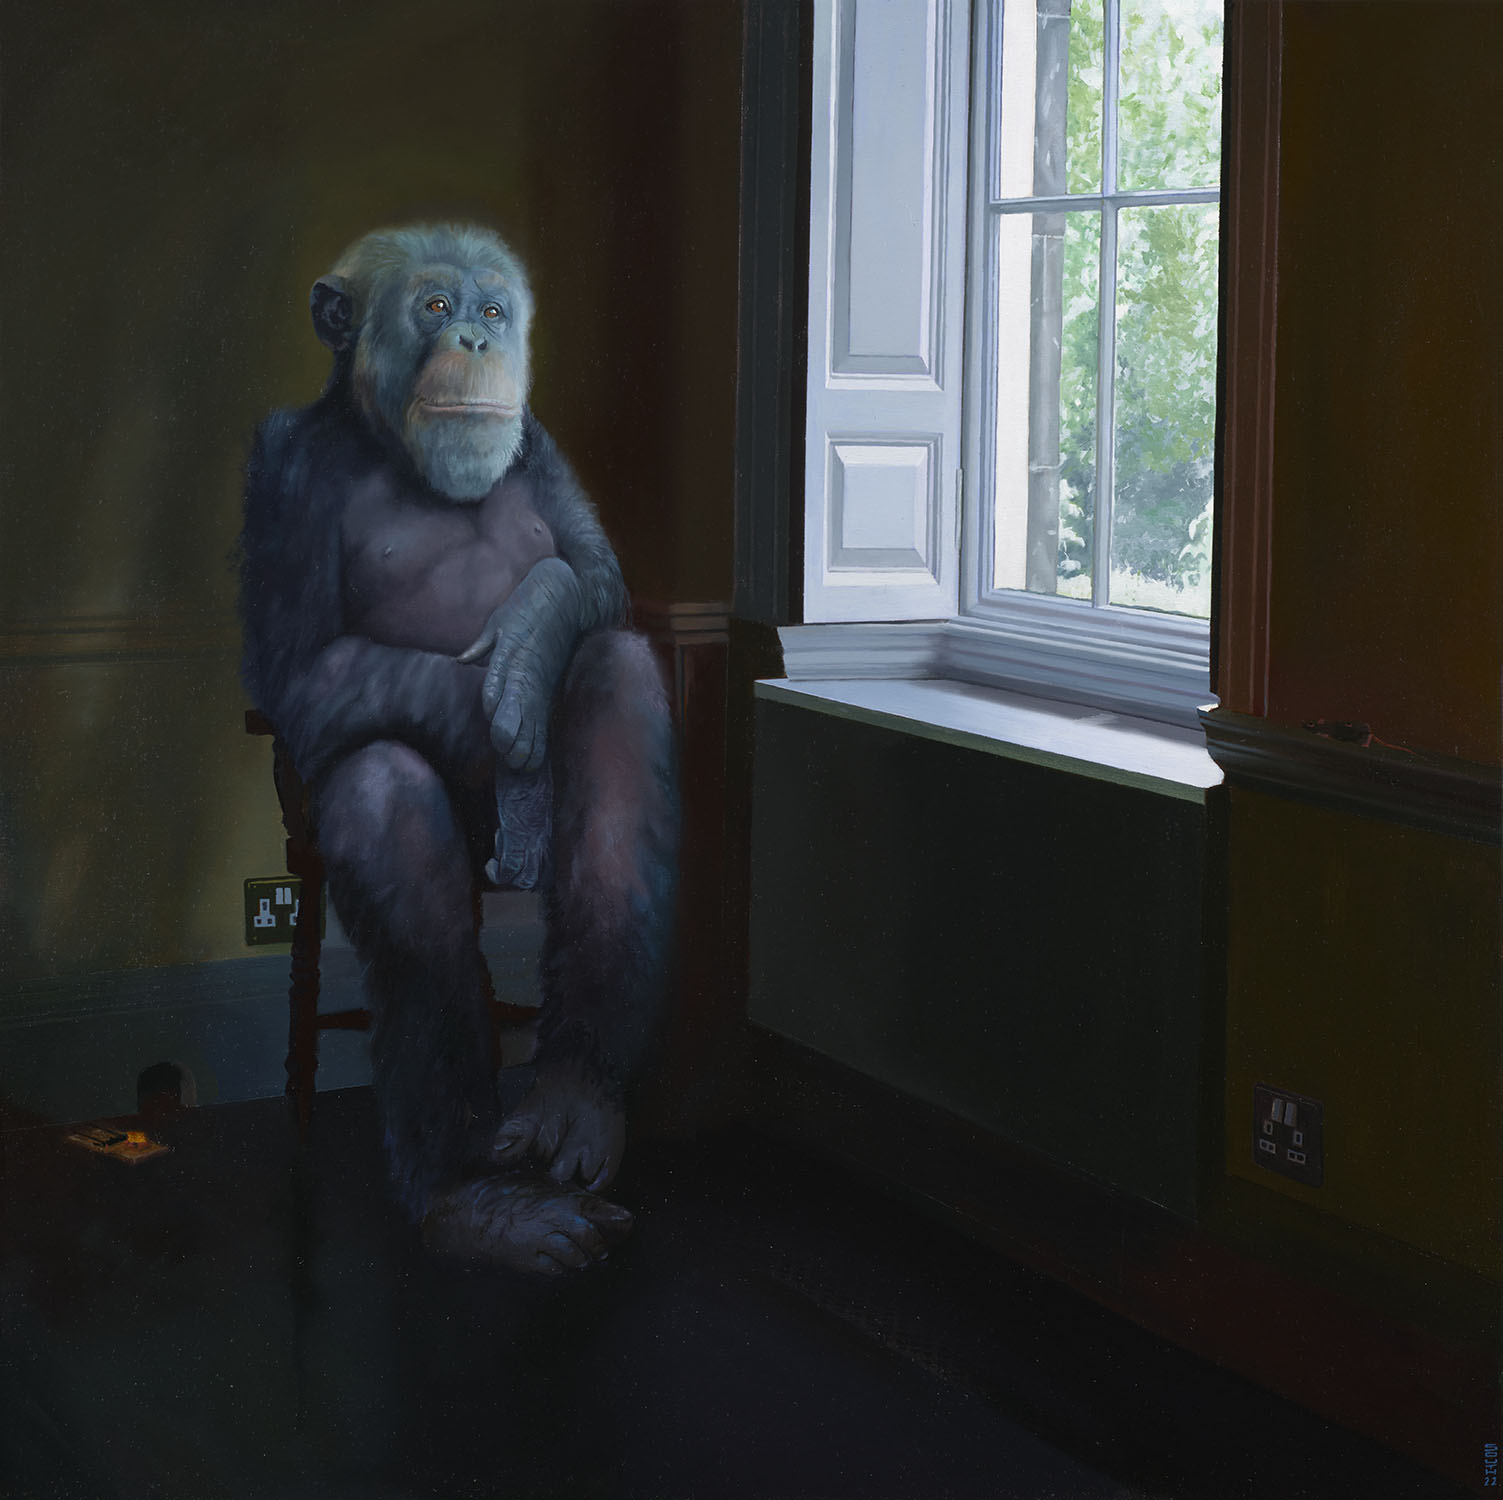 a monkey seated near a window